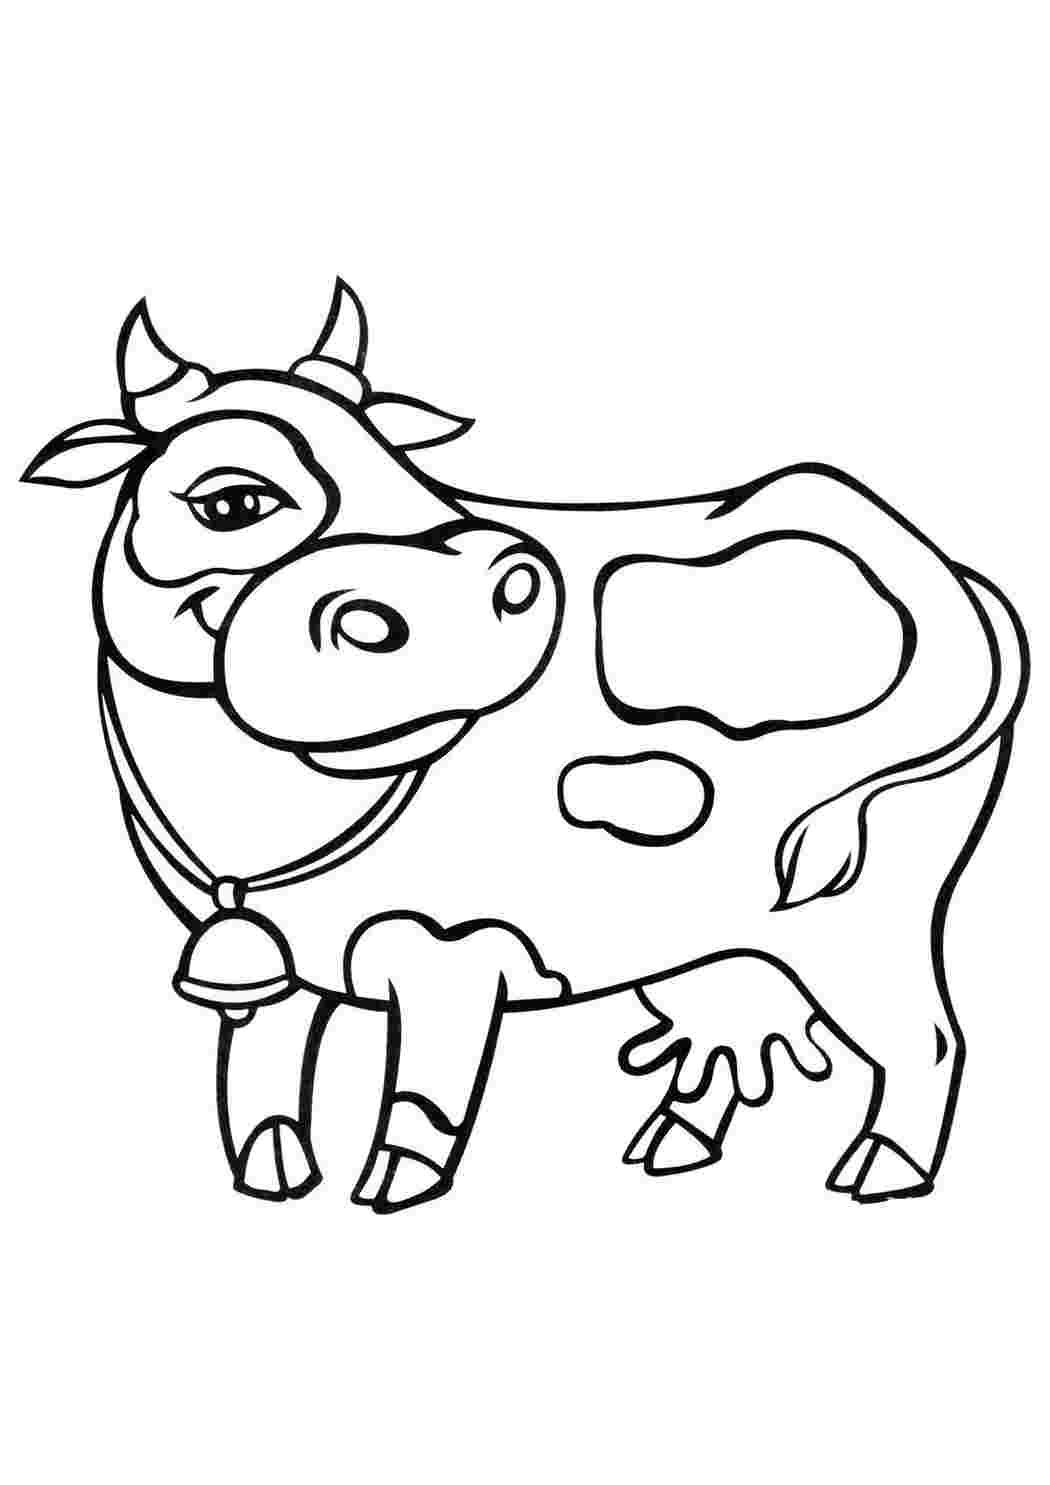 Популярное домашнее животное - корова